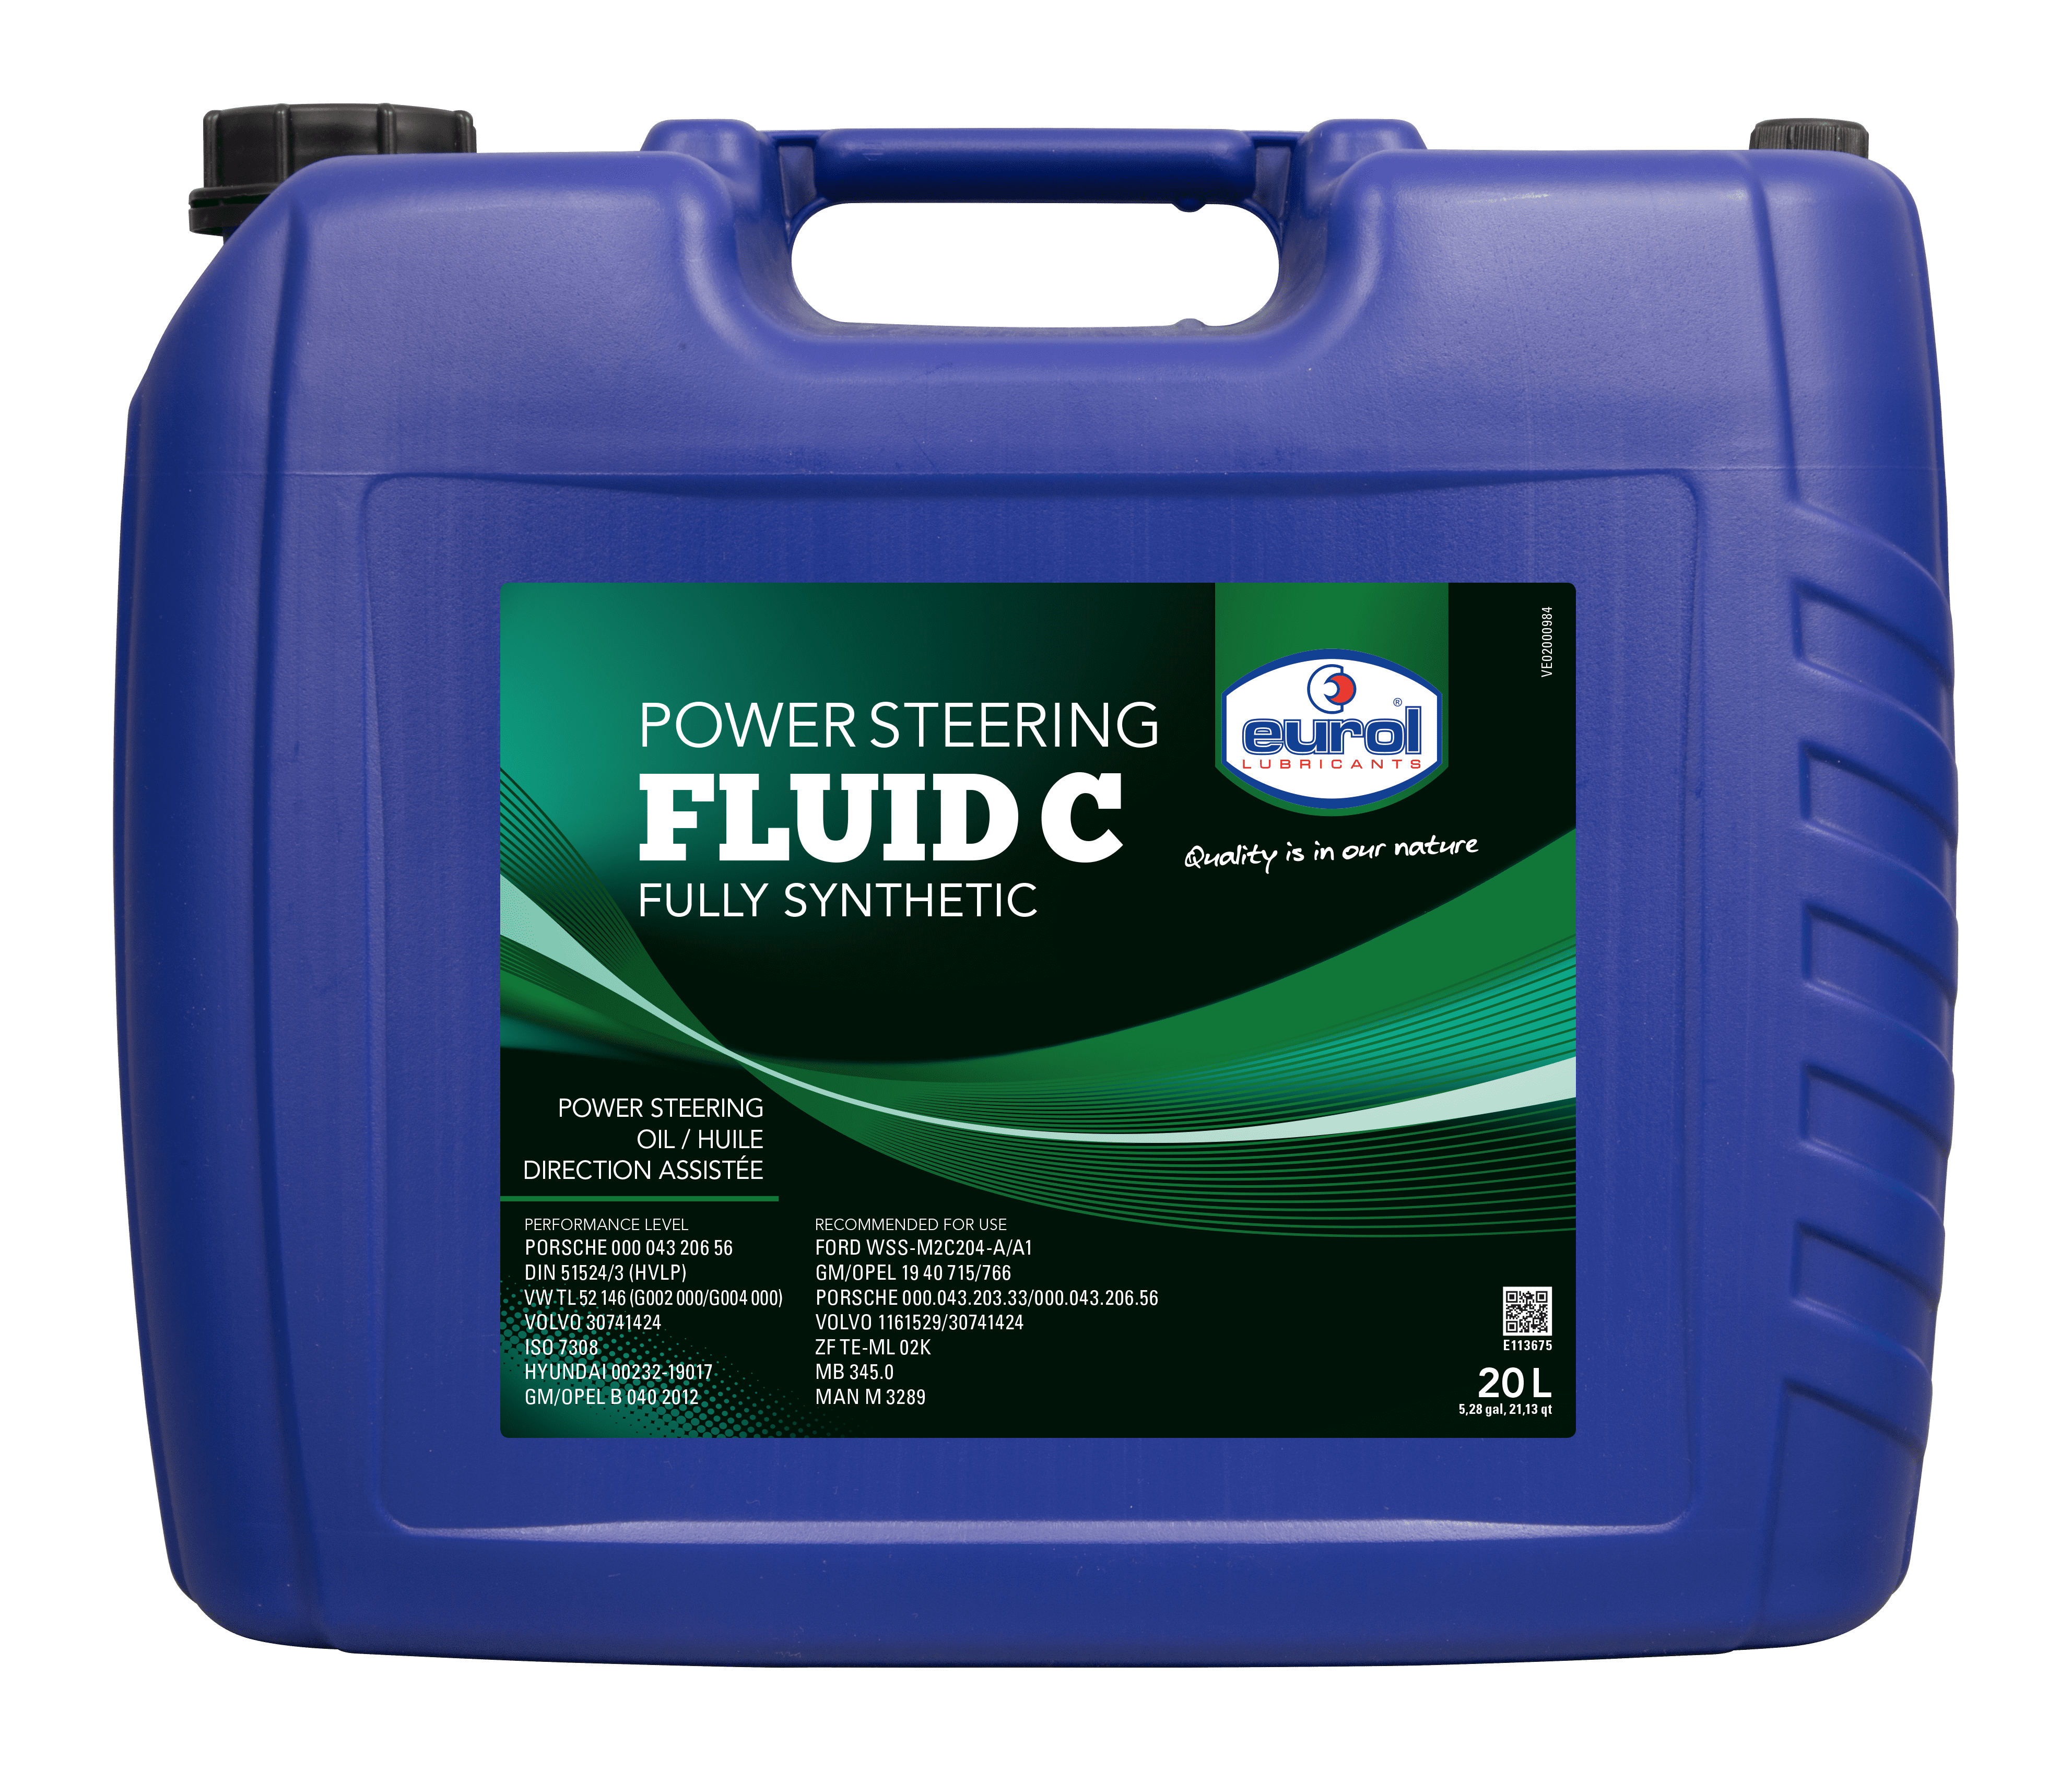 Eurol Powersteering fluid C, 20 lt